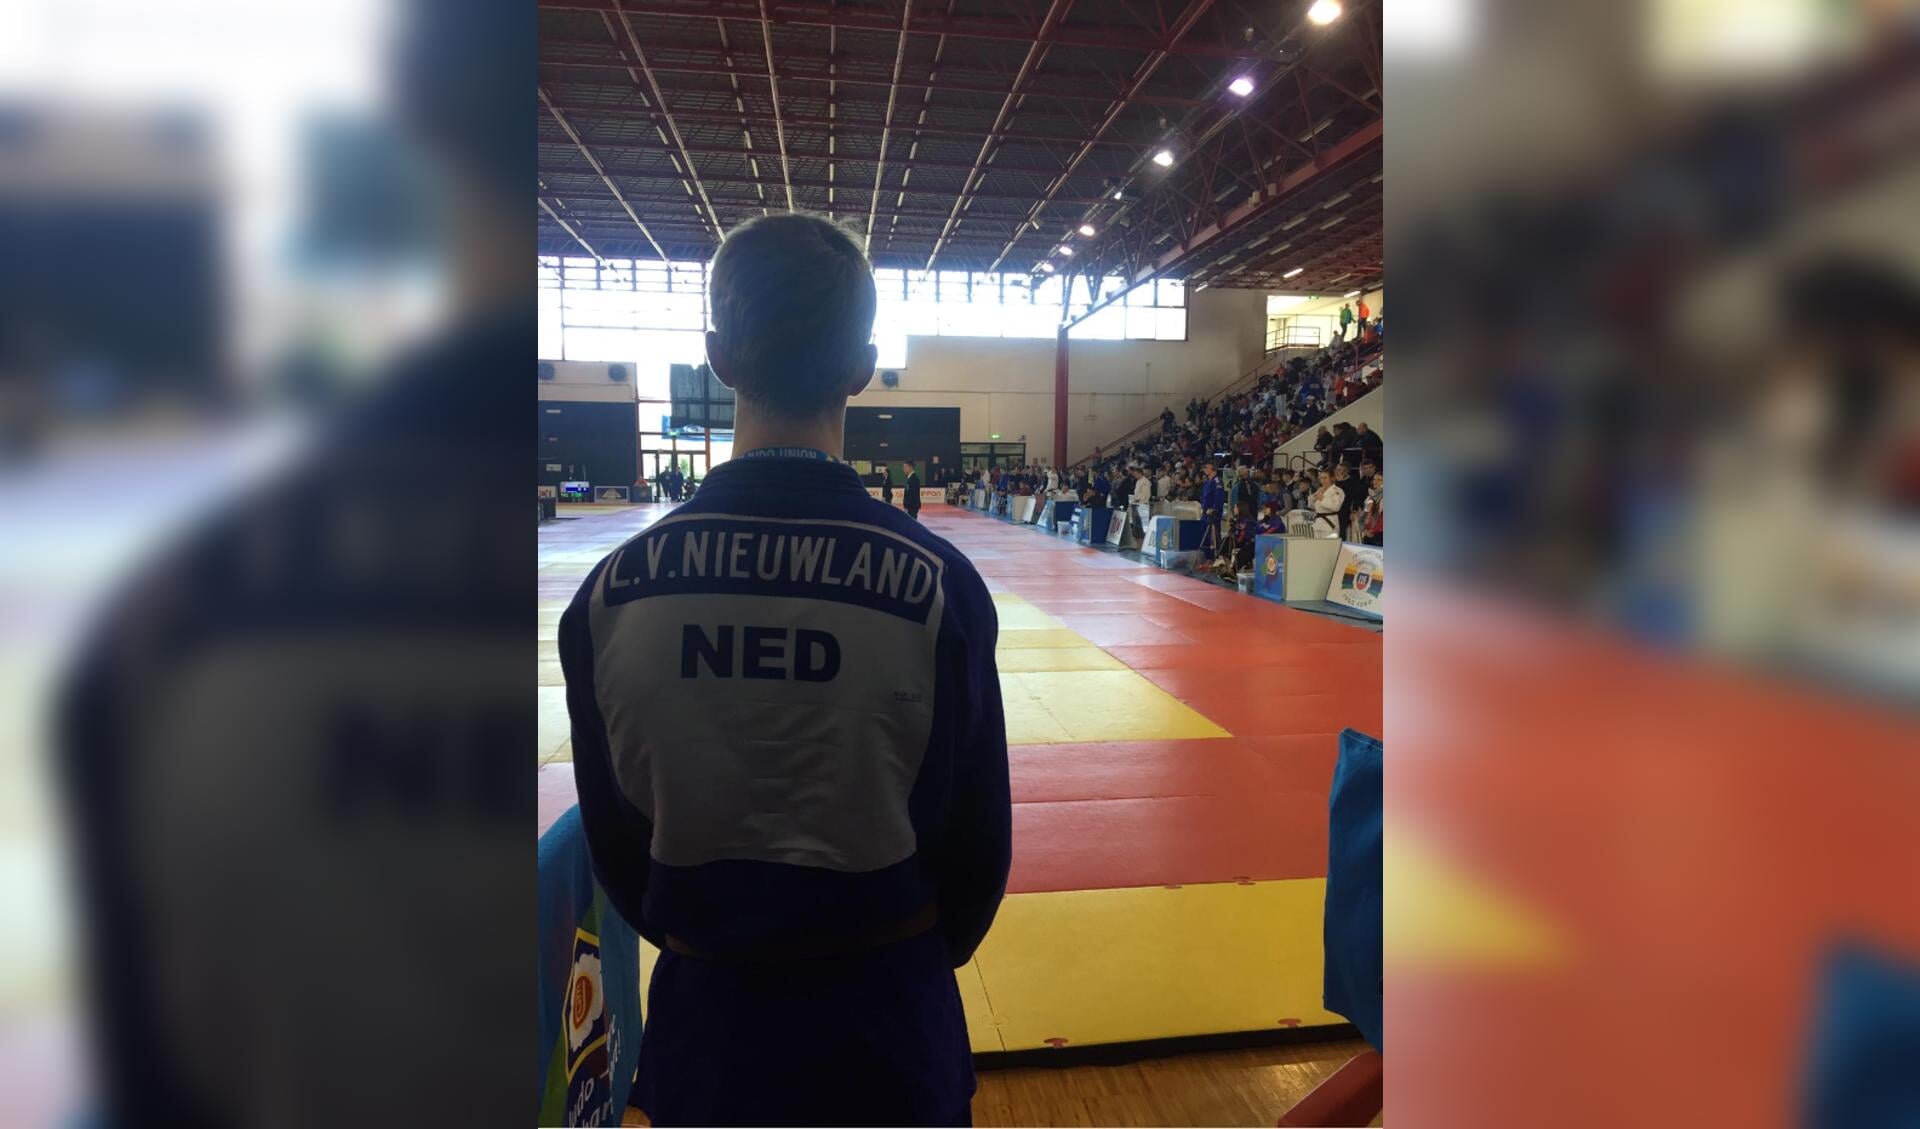 Luuk van Nieuwland, judoka van Nippon Judo Achterhoek debuteert op Europees judotournooi in Italië. Foto: PR